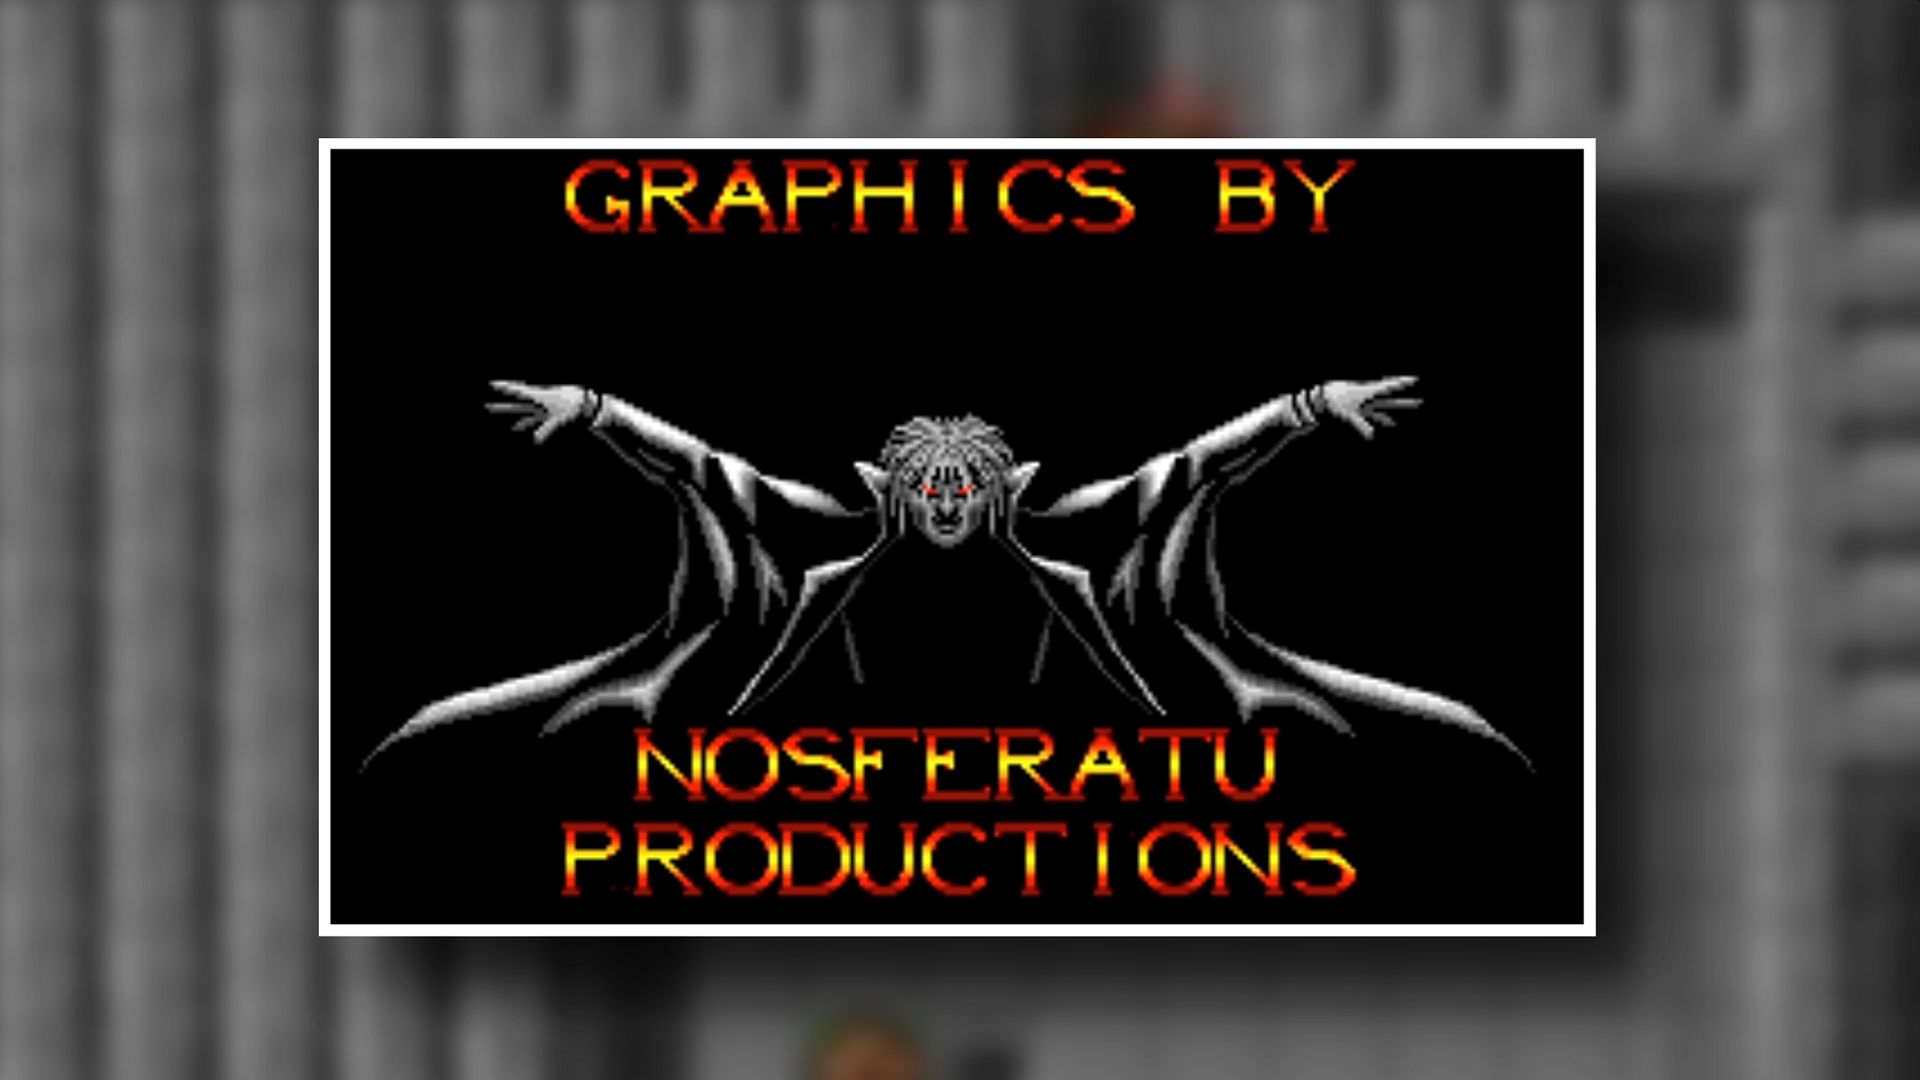 Nosferatu Productions was Robin's company.